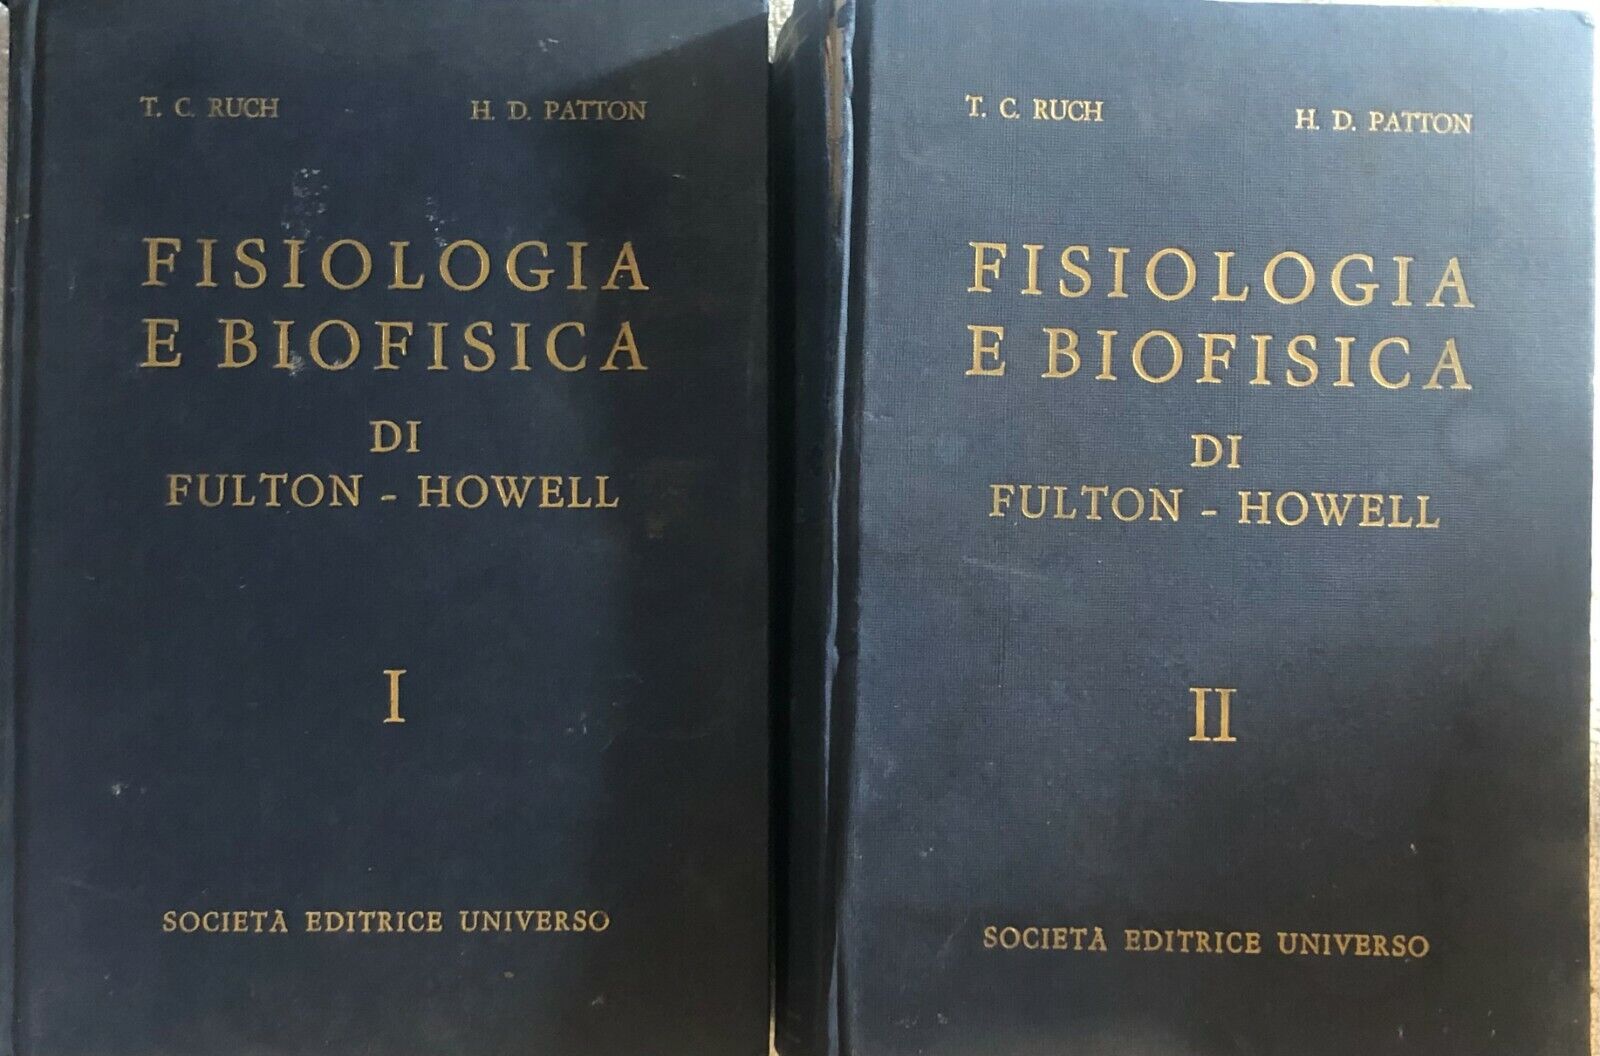 Fisiologia e biofisica I-II di T.c. Ruch - H.d. Patton,  1973,  Societ? Editrice